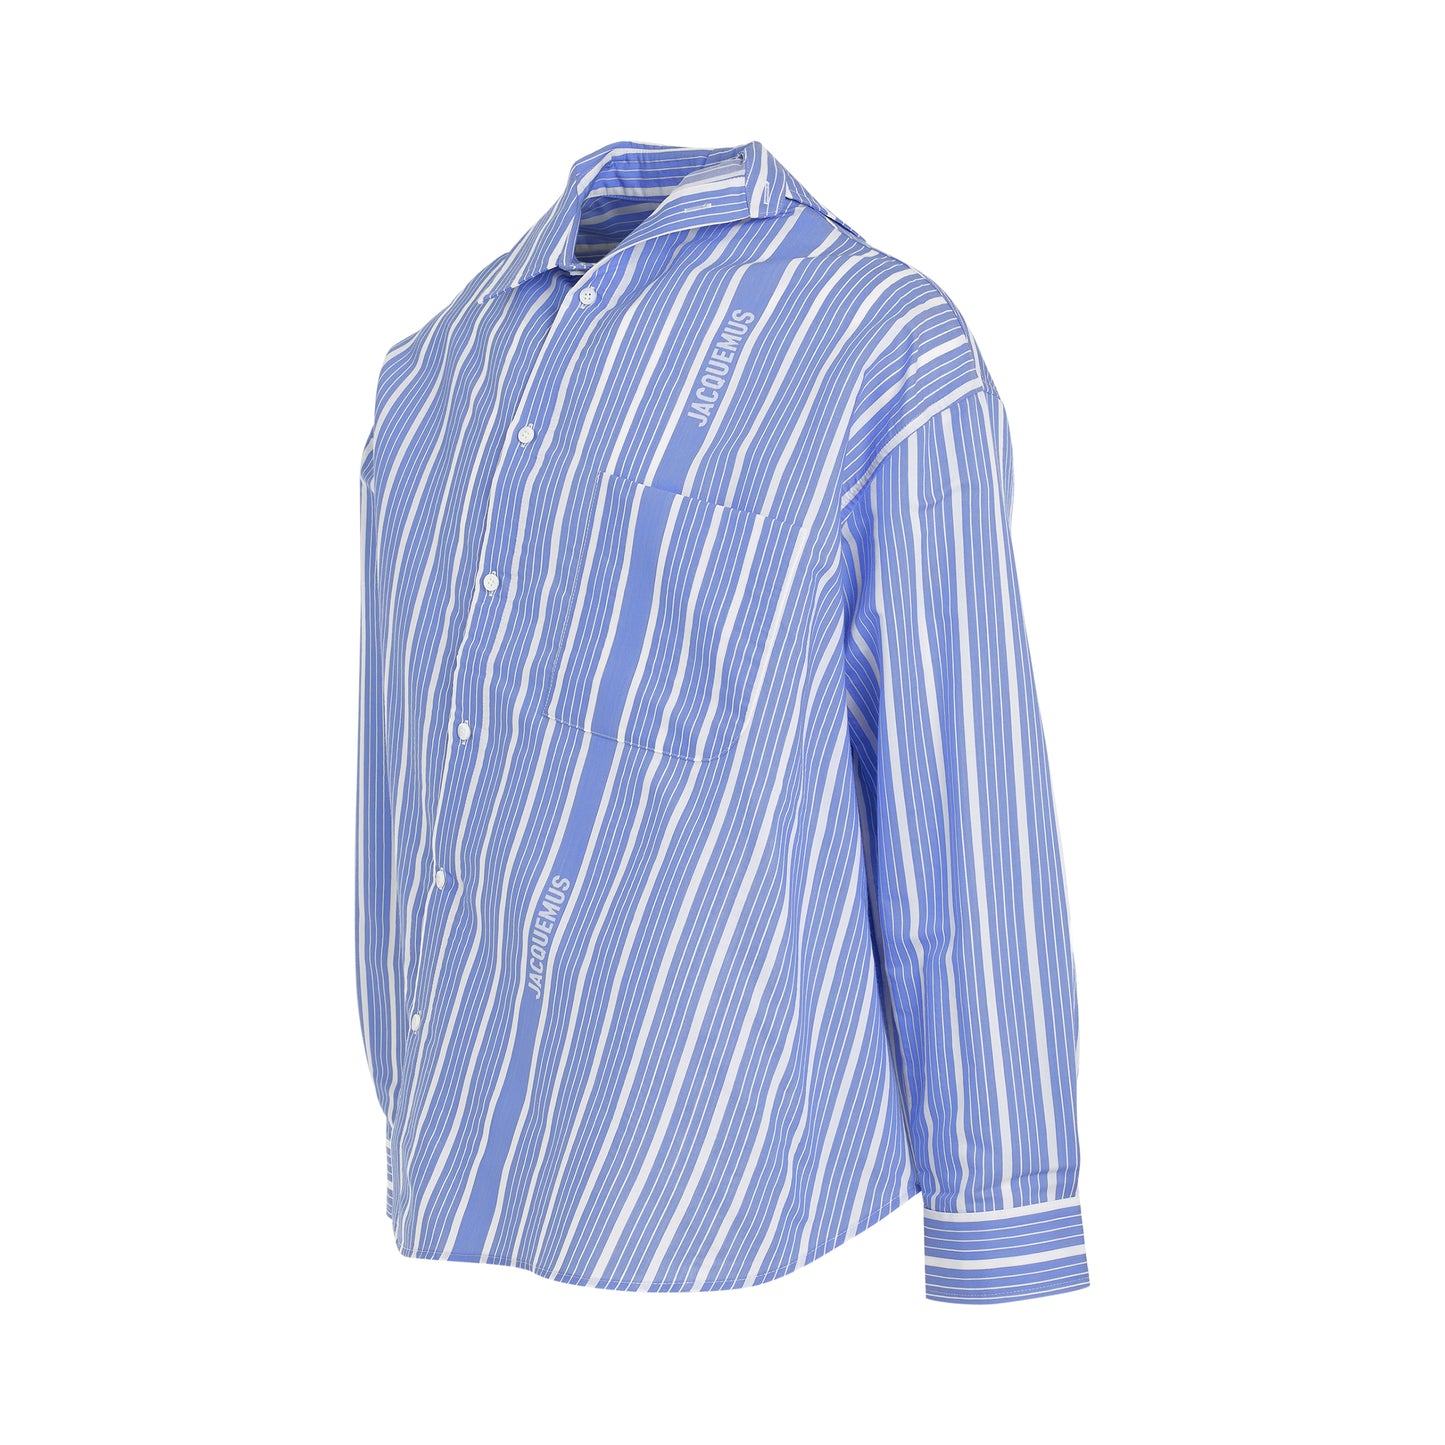 Cuadro Asymmetric Shirt in Blue Stripe